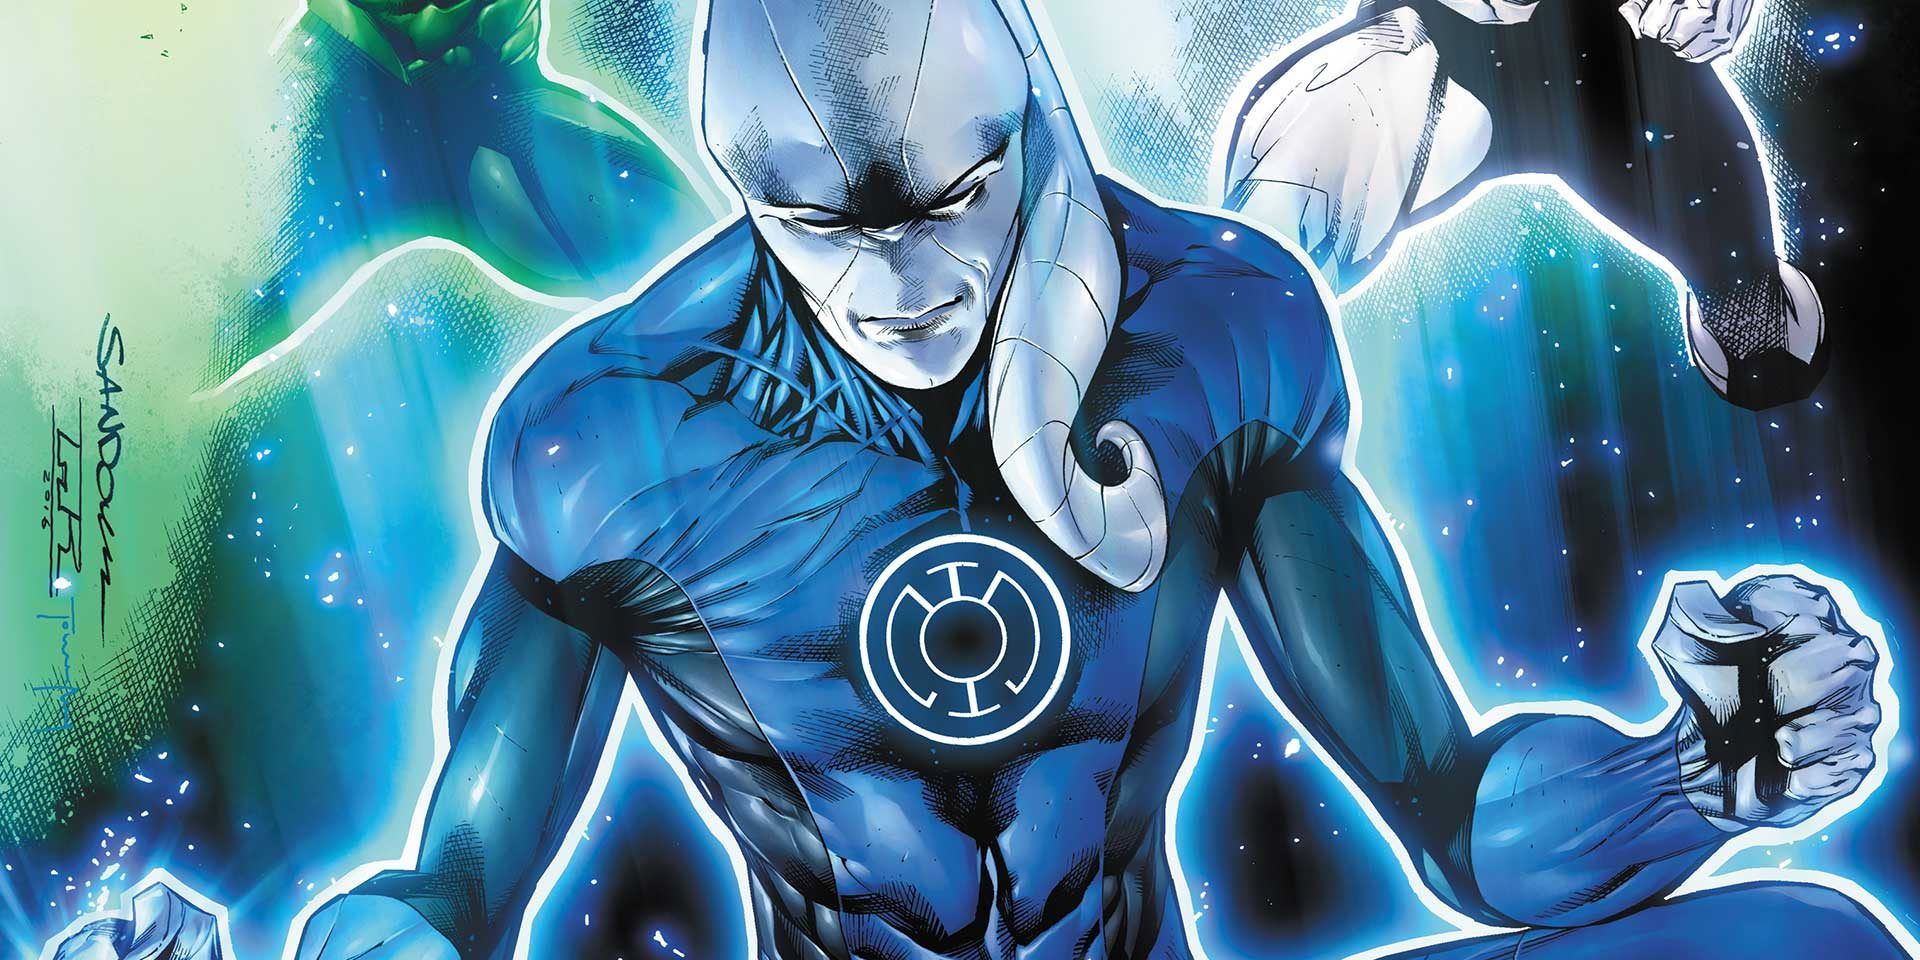 Blue Lantern, Saint Walker, powering up in DC Comics